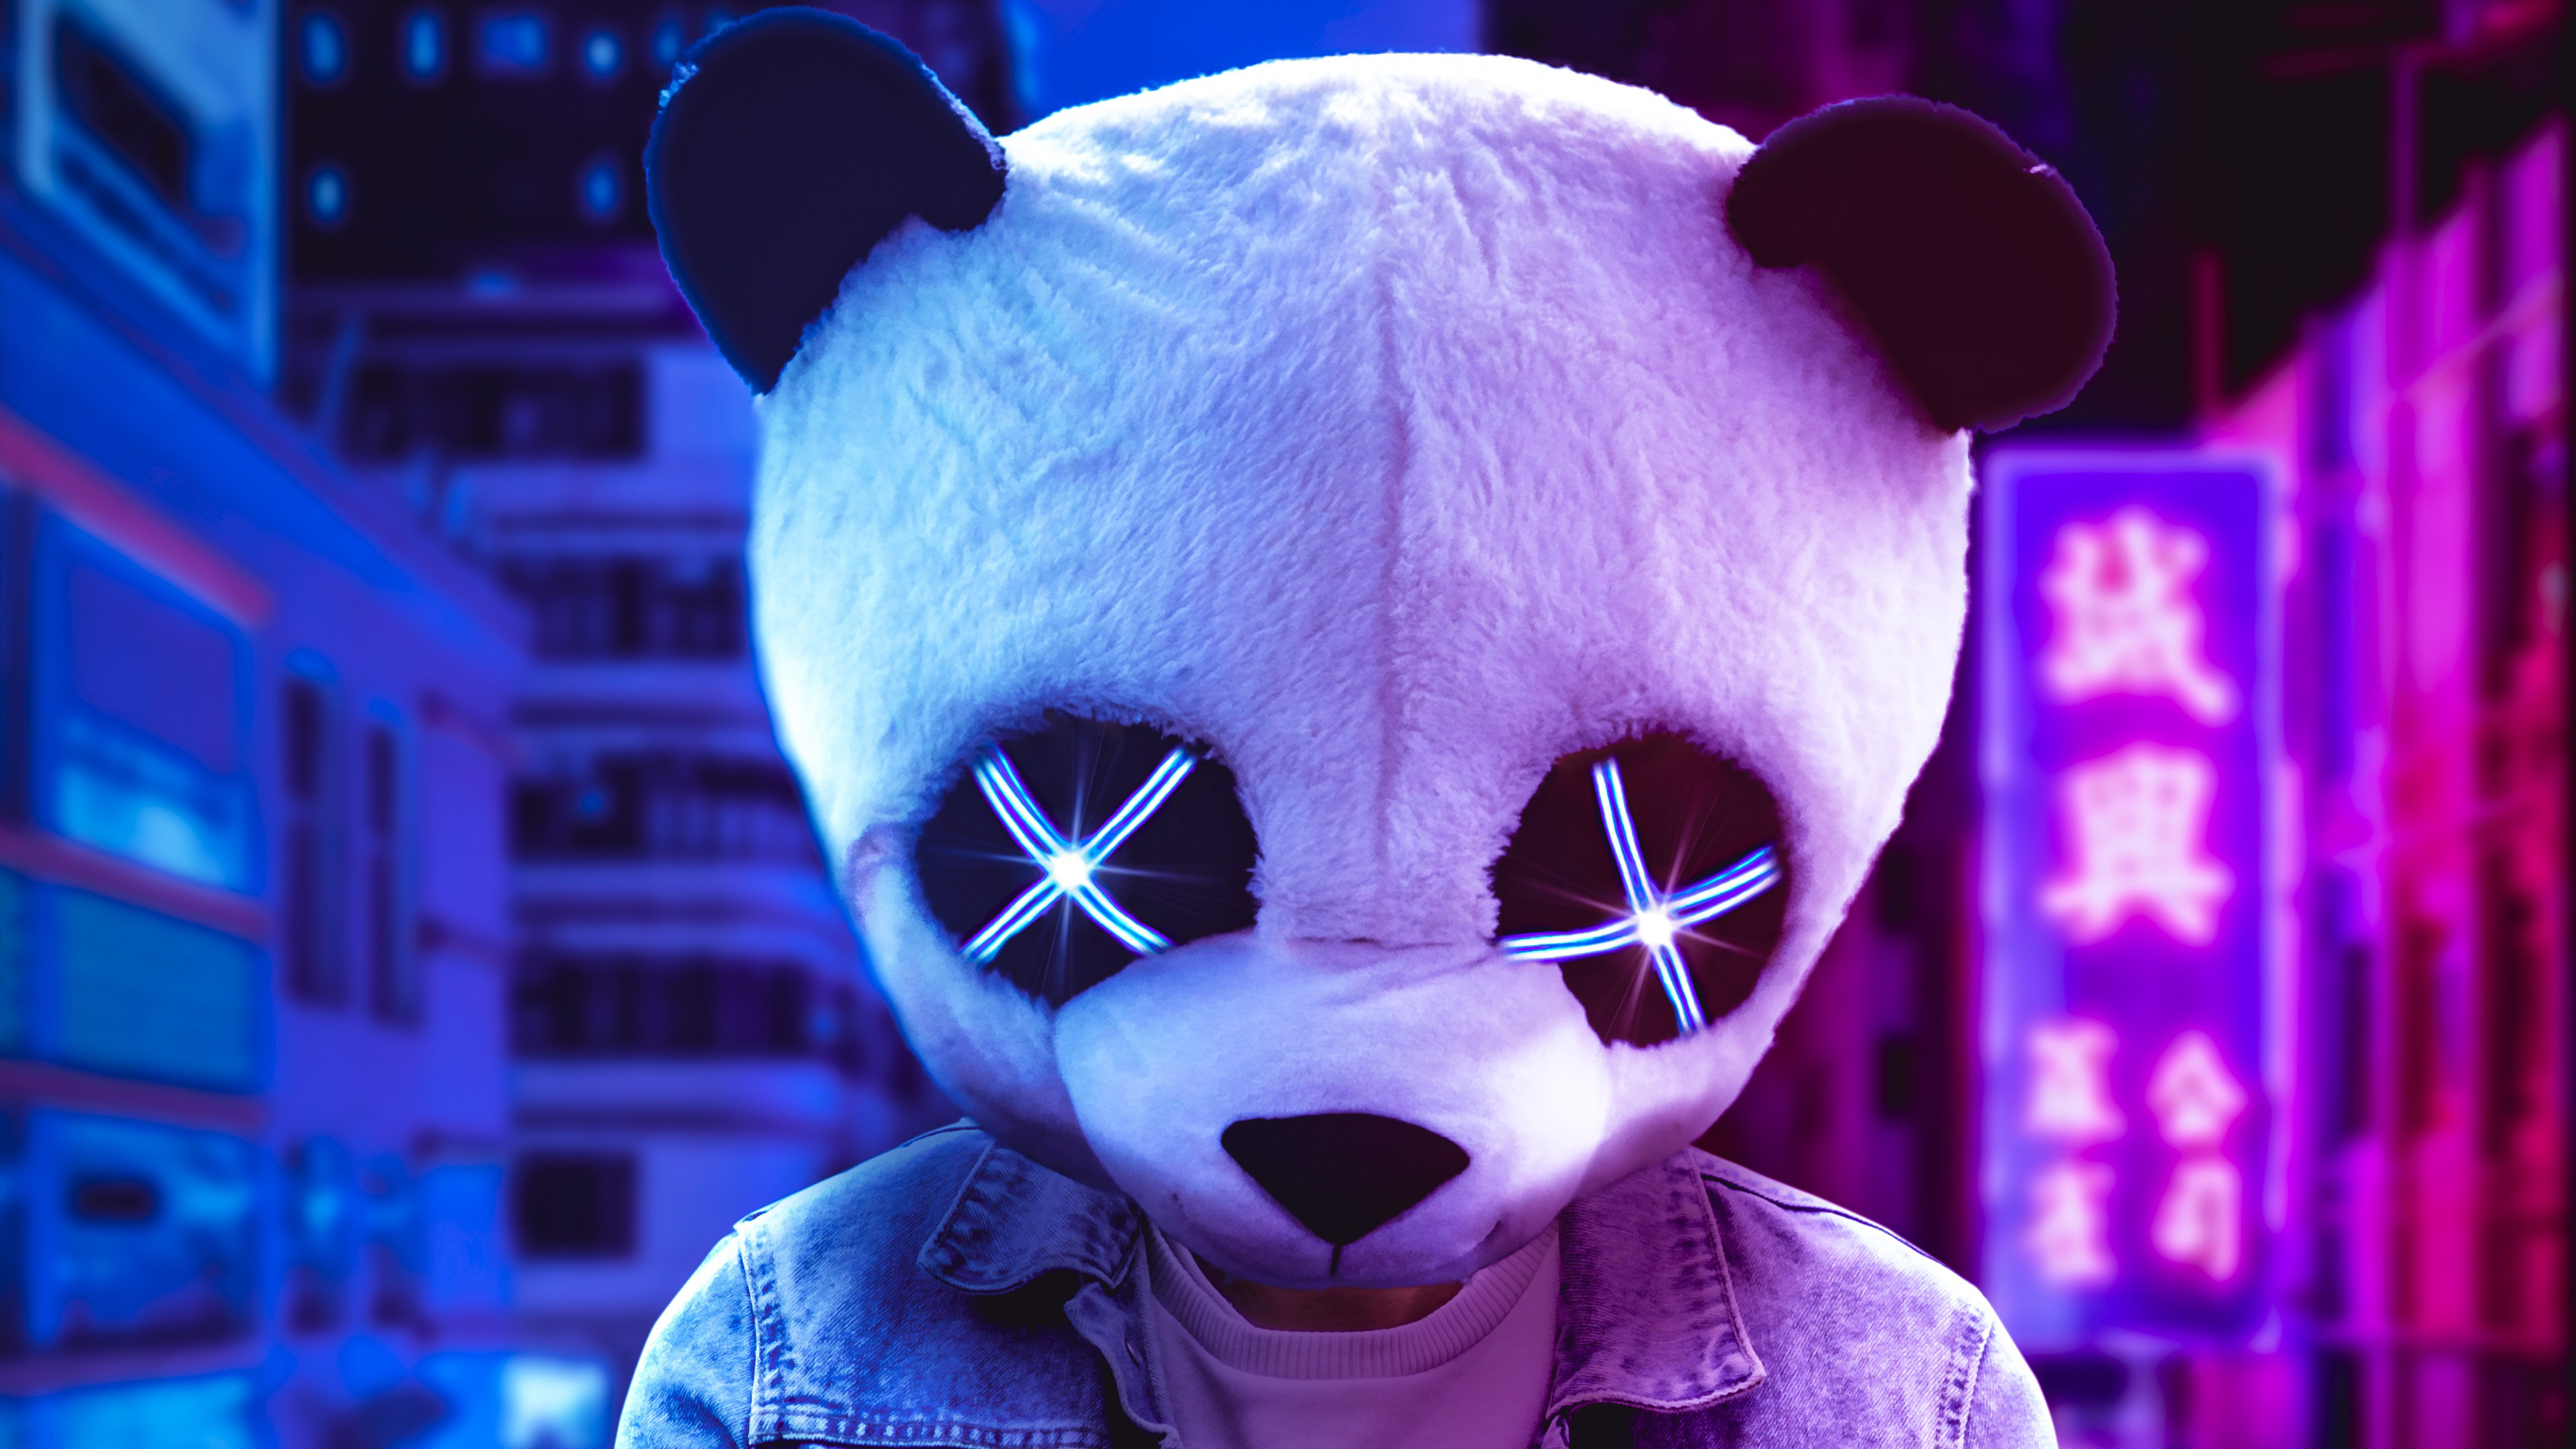 Digital Digital Art Artwork Illustration Mask Panda Panda Mask Blue Pink Neon Neon Lights City Archi 3240x1822